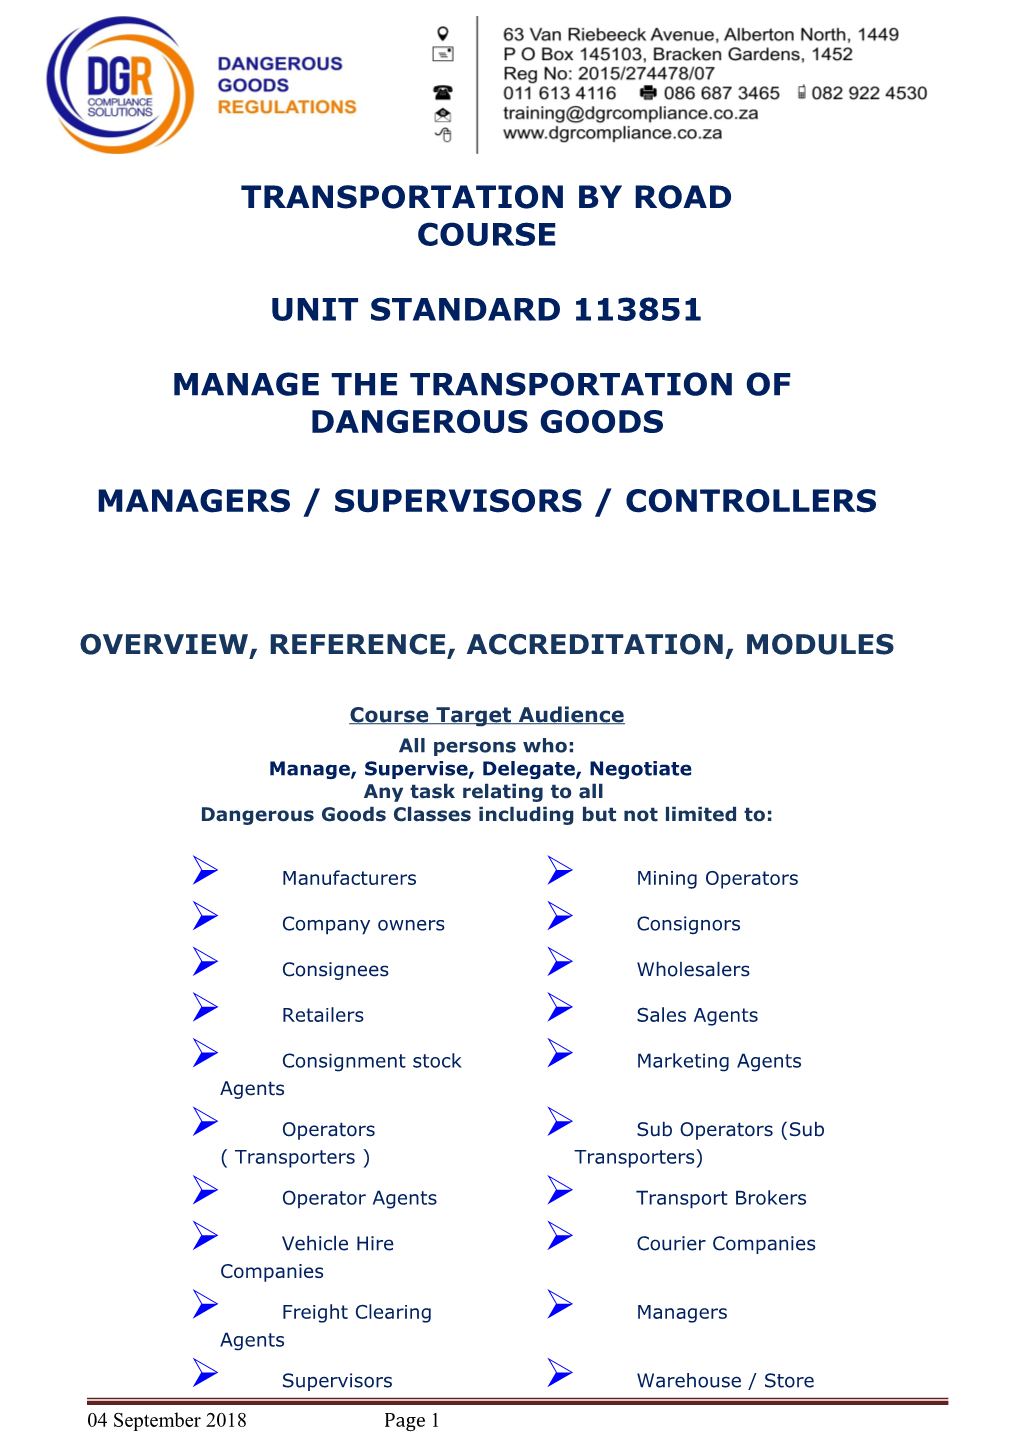 Management / Supervisory /Controller